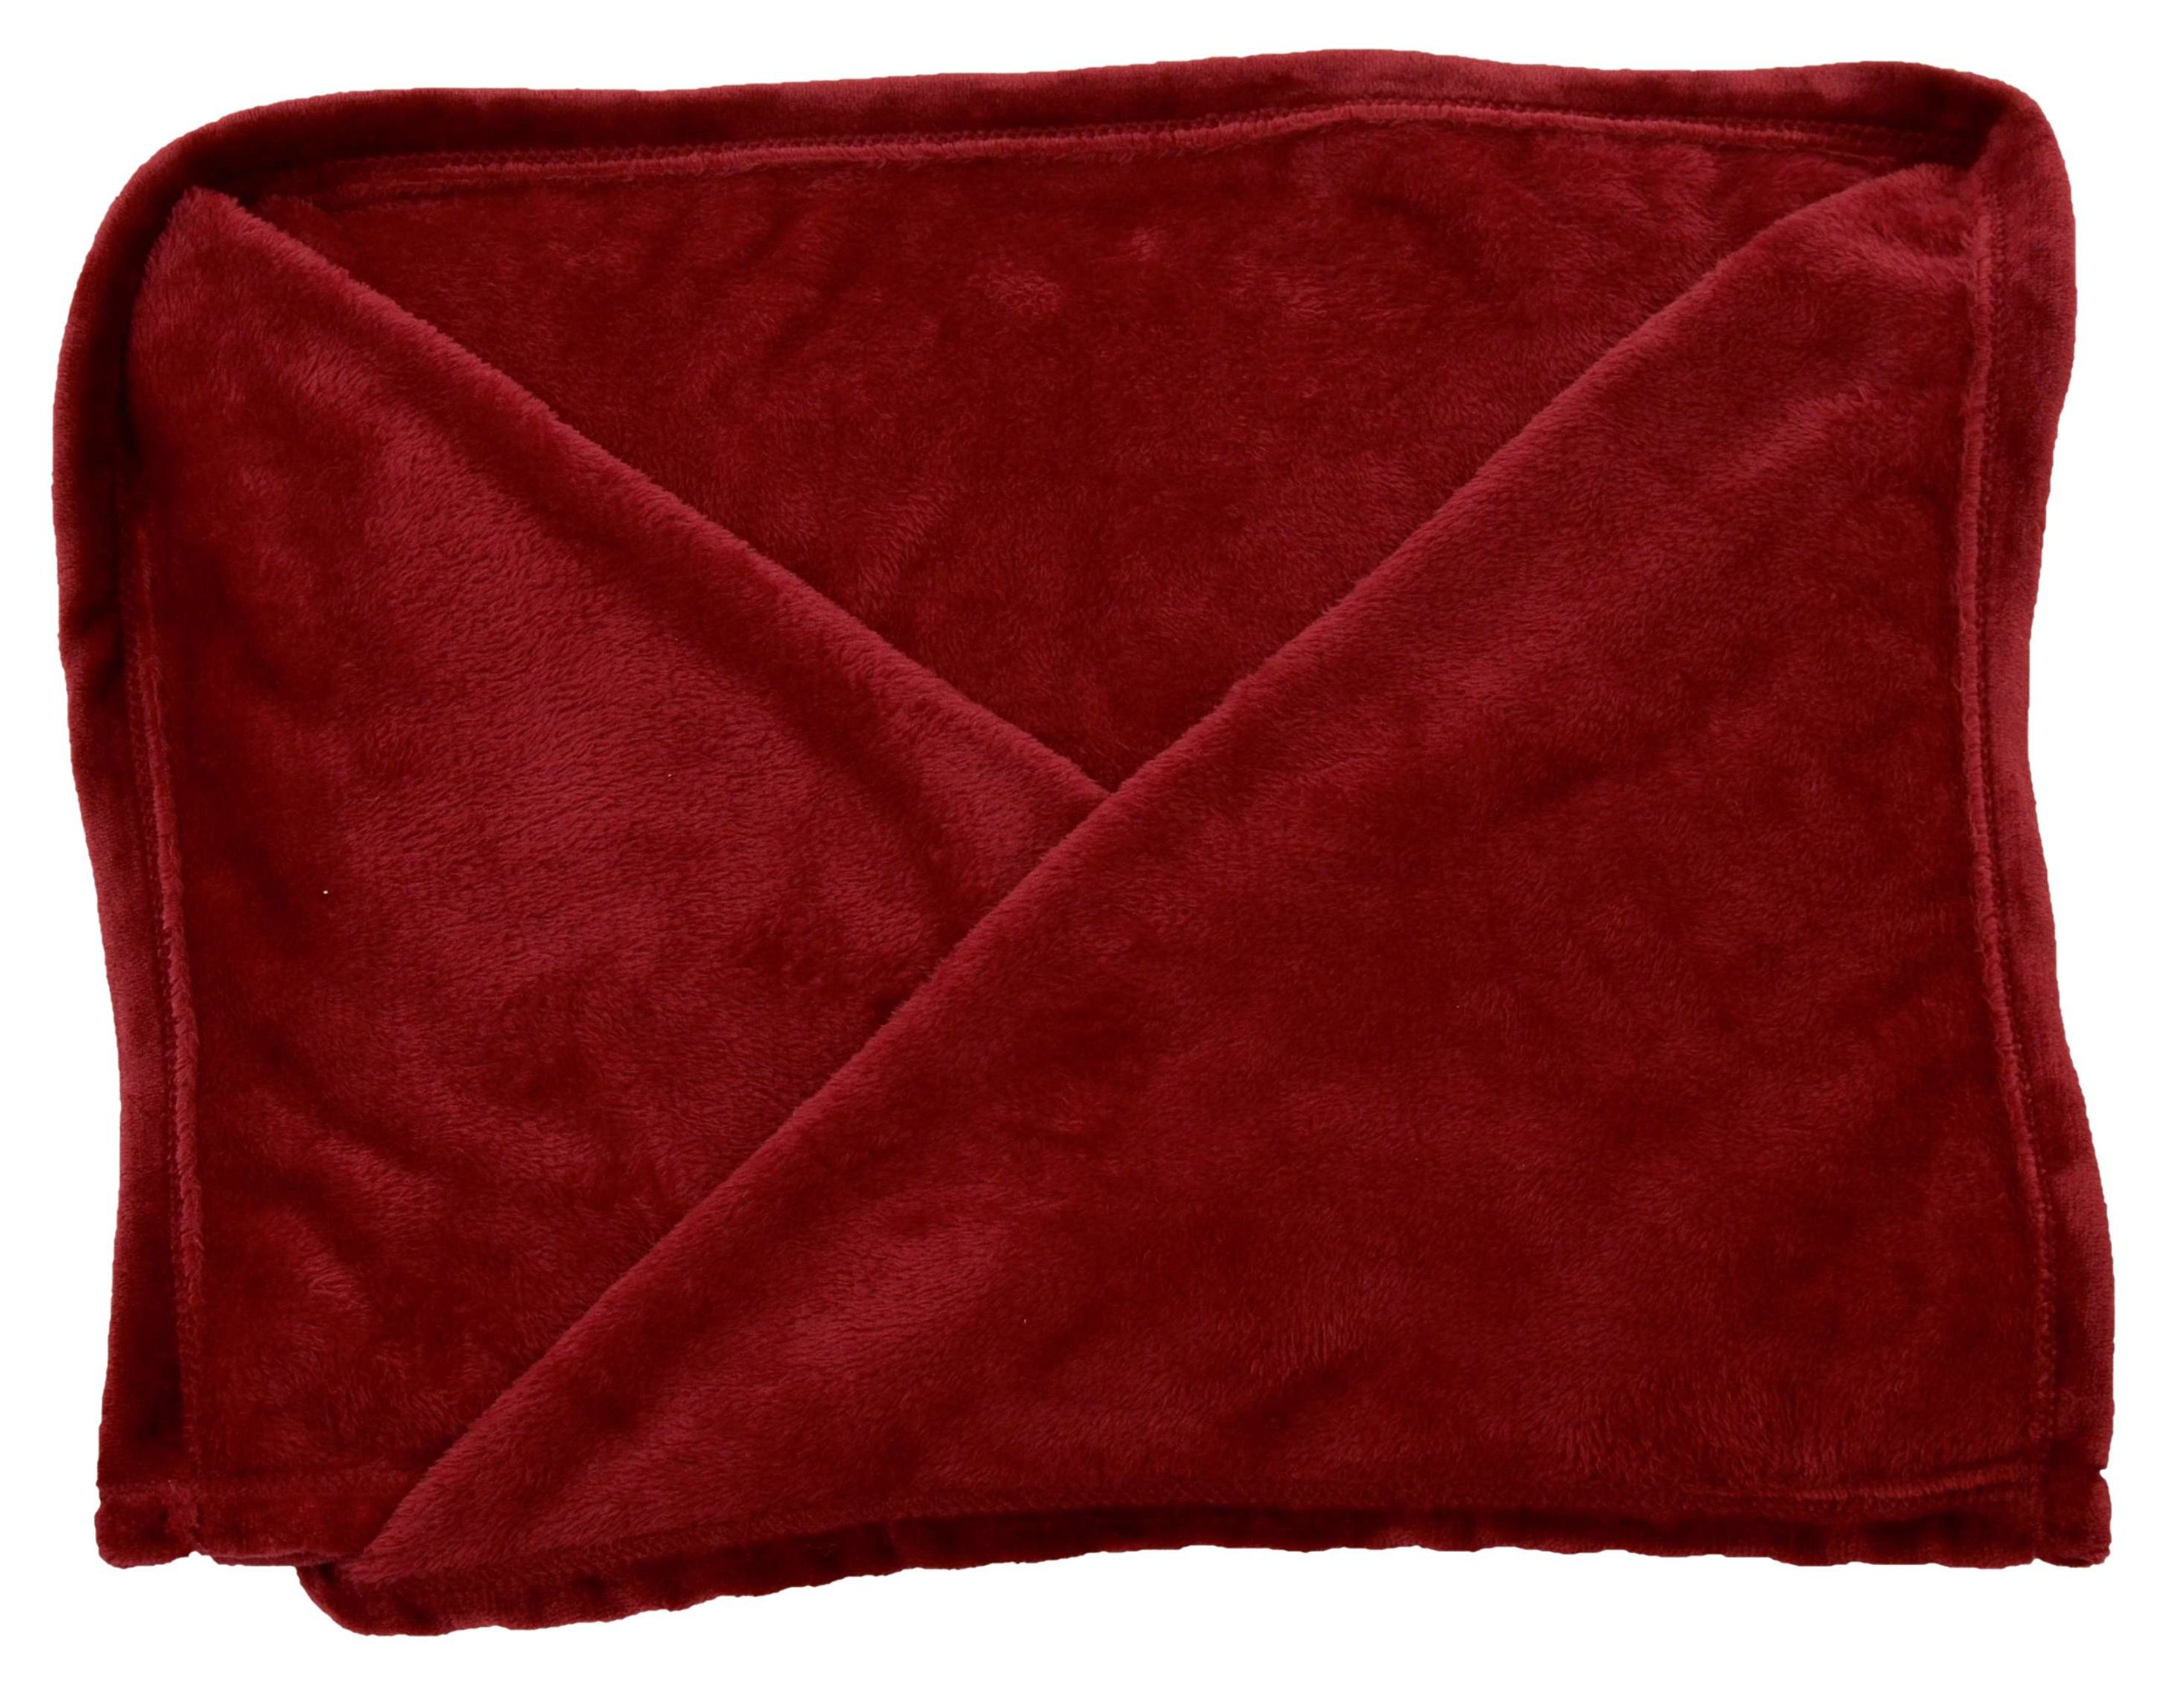 Snuggle fleece blanket with sleeves garnet red 150x180cm